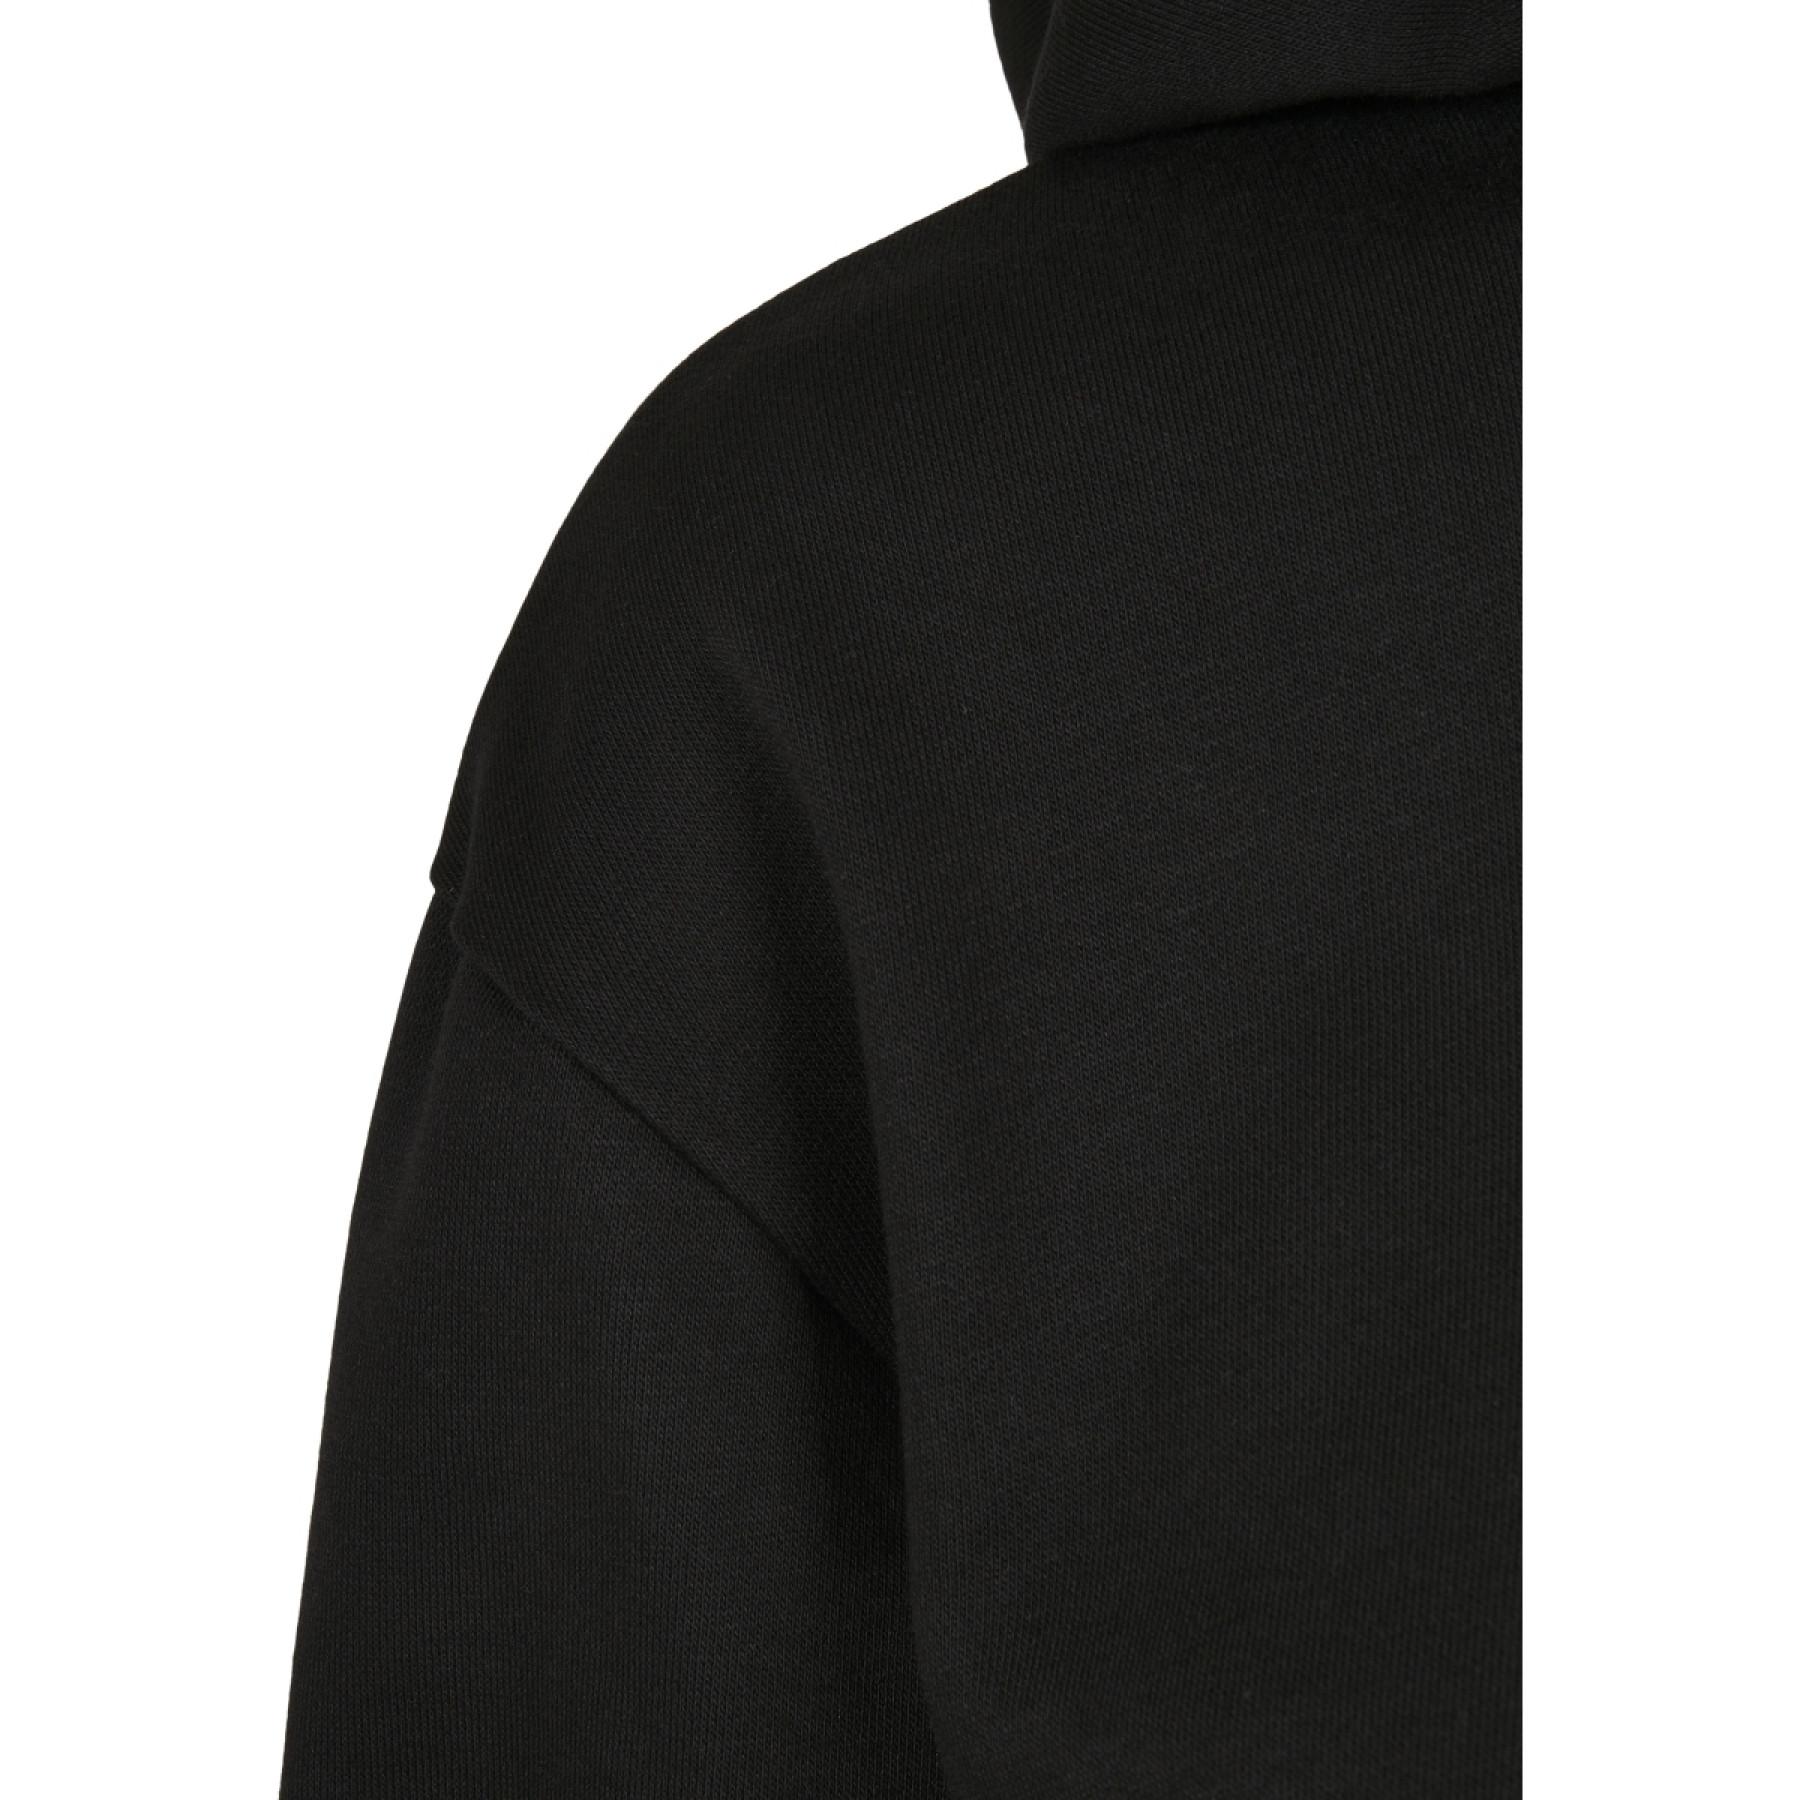 Women's hooded sweatshirt Urban Classics court terry- Large sizes